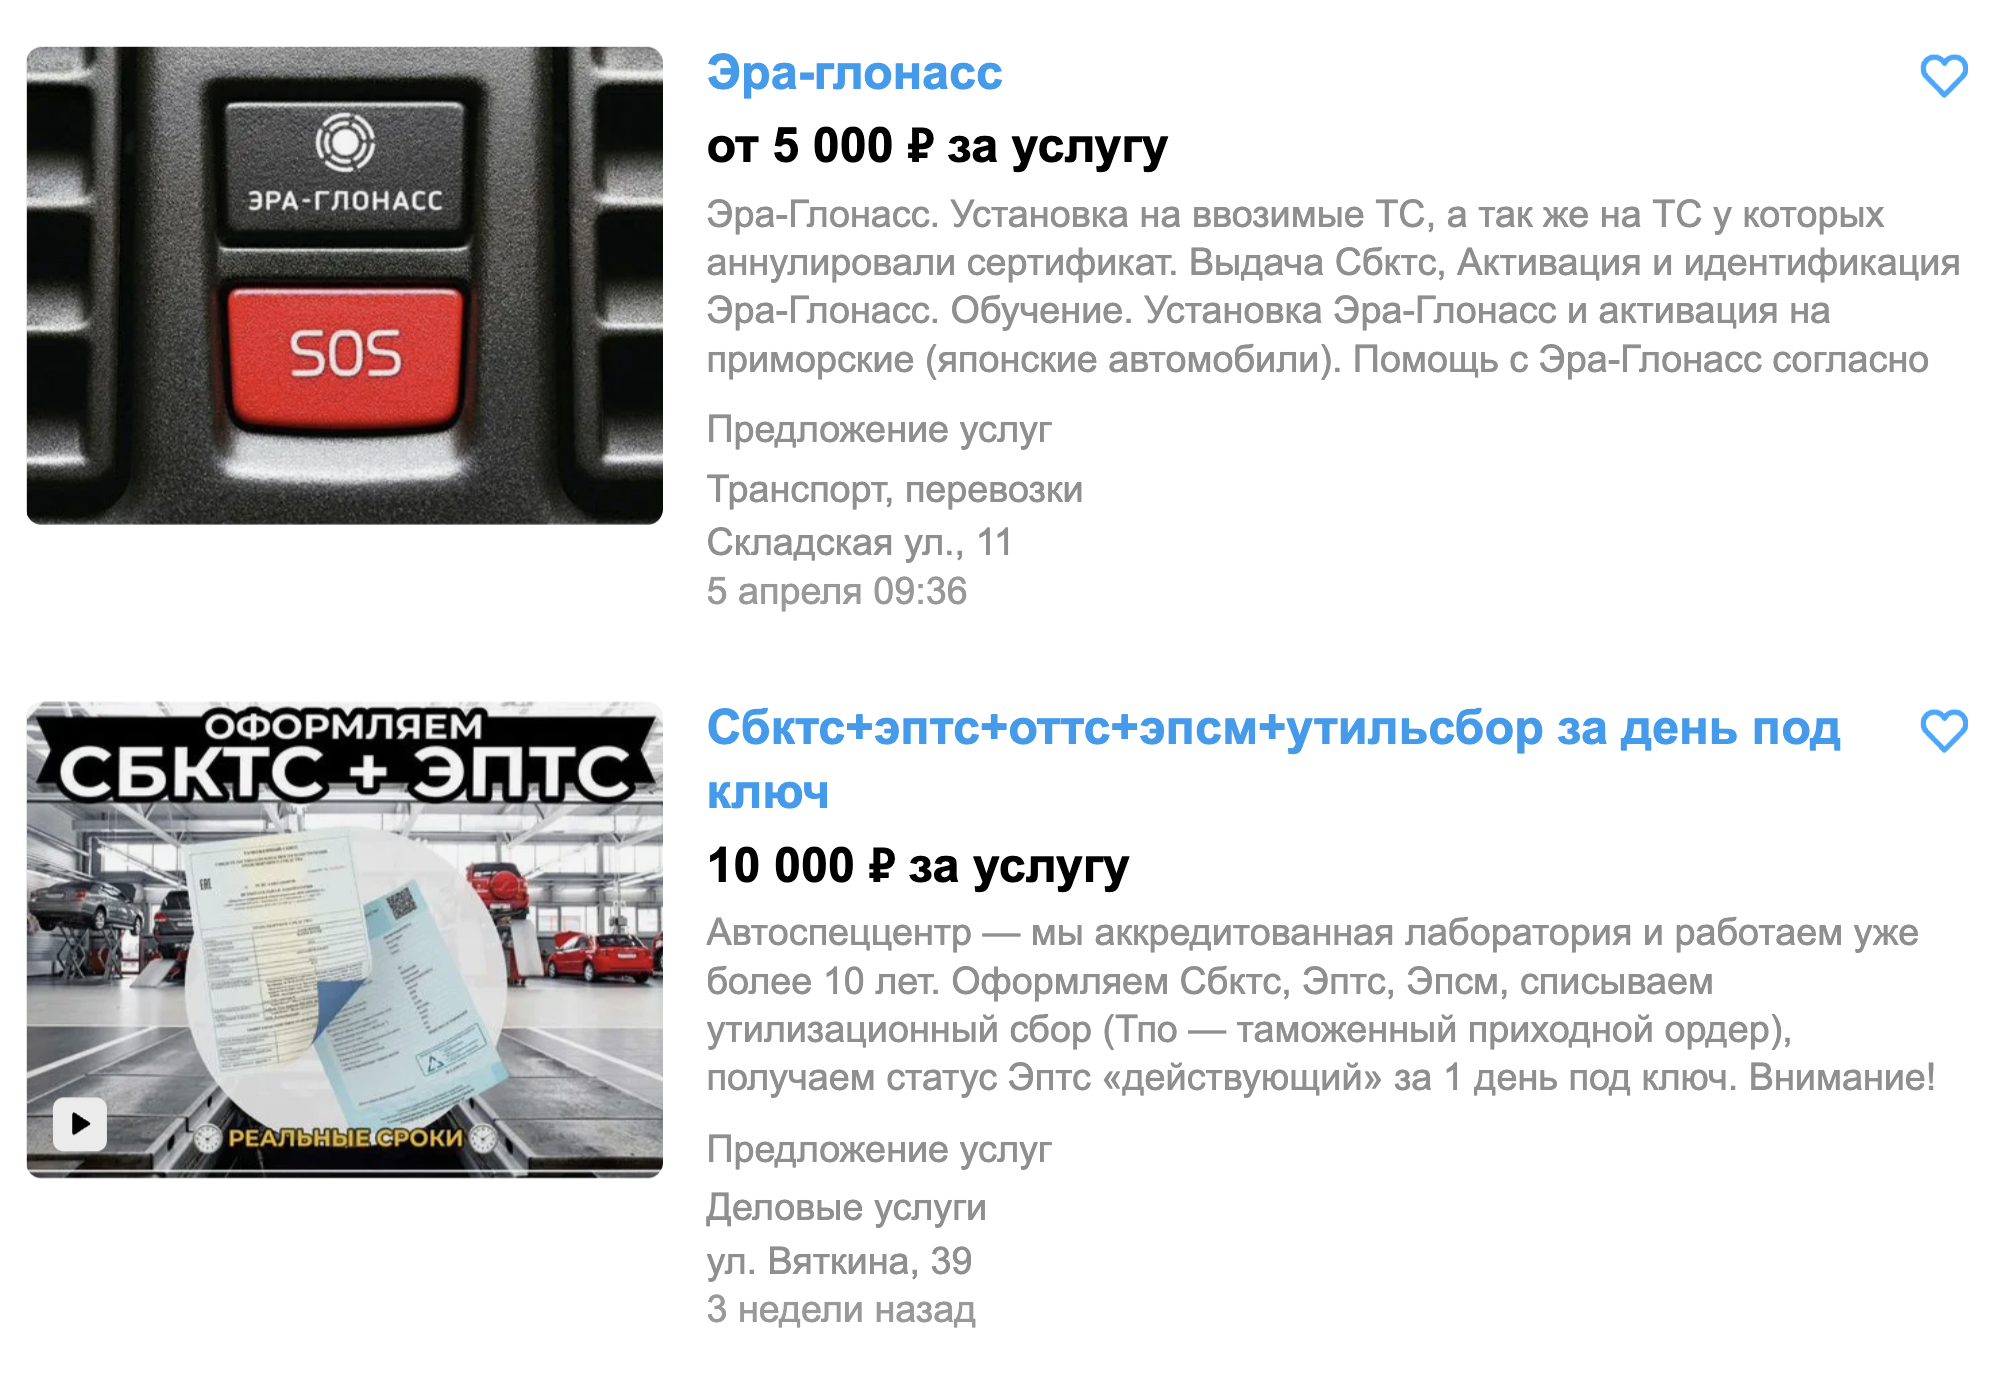 На досках объявлений устройства предлагают по цене от 5000 до 10 000 ₽. Источник: avito.ru